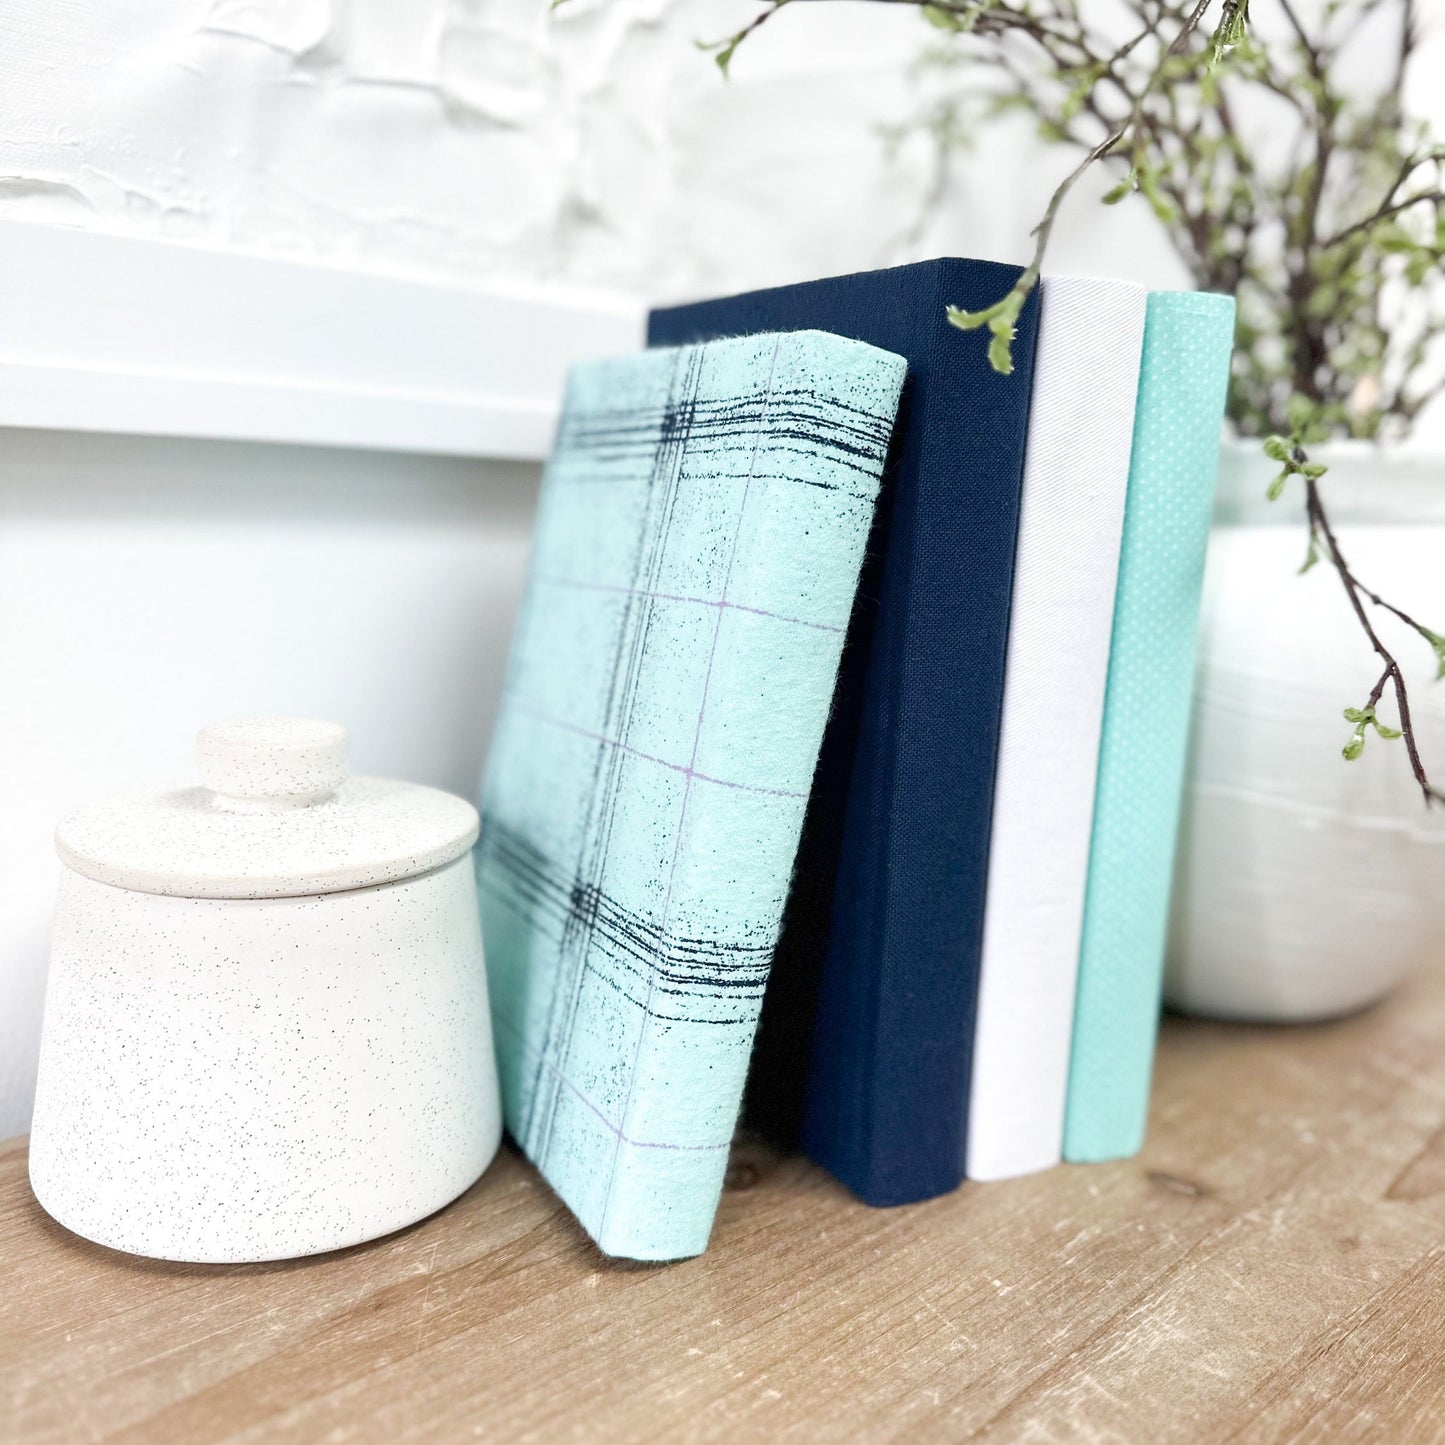 Teal Home Decor, Decorative Book Set, Fabric Covered Books, Shelf Decor